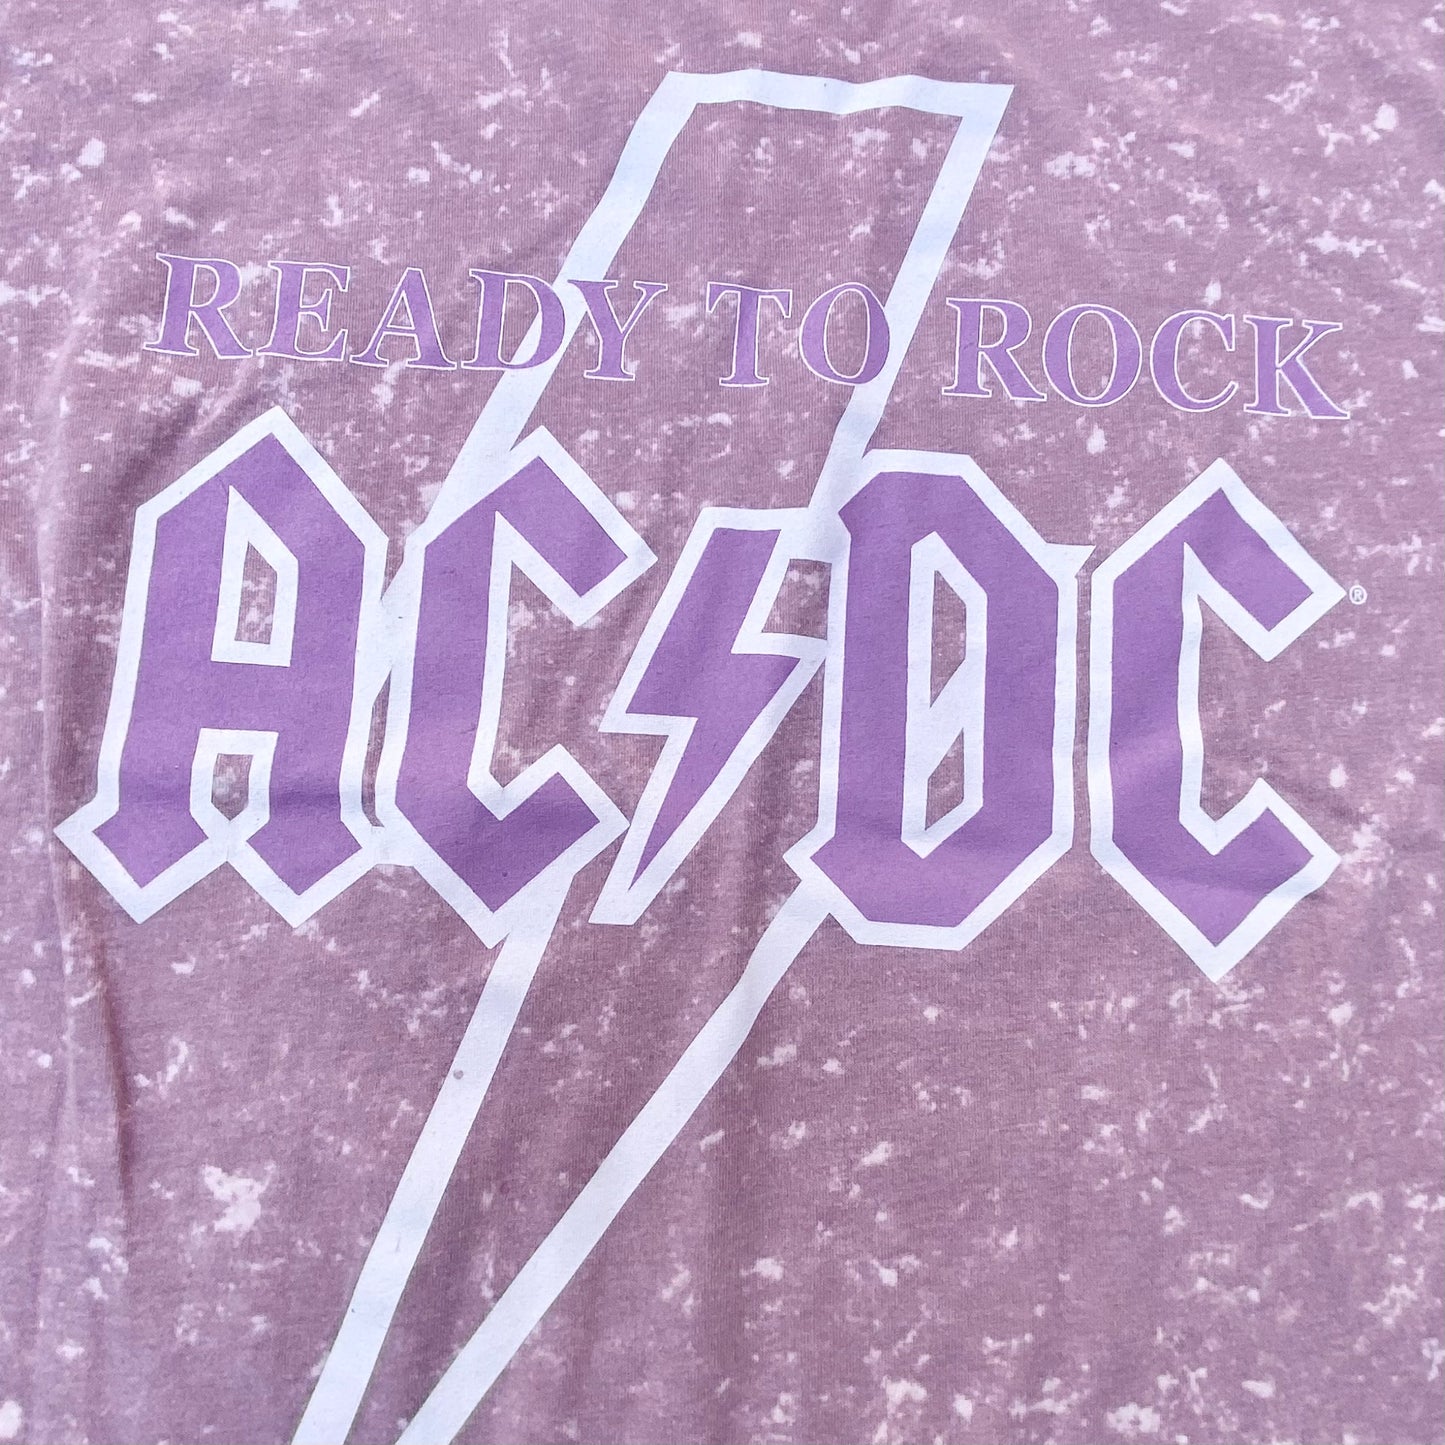 Secondhand AC/DC T-Shirt